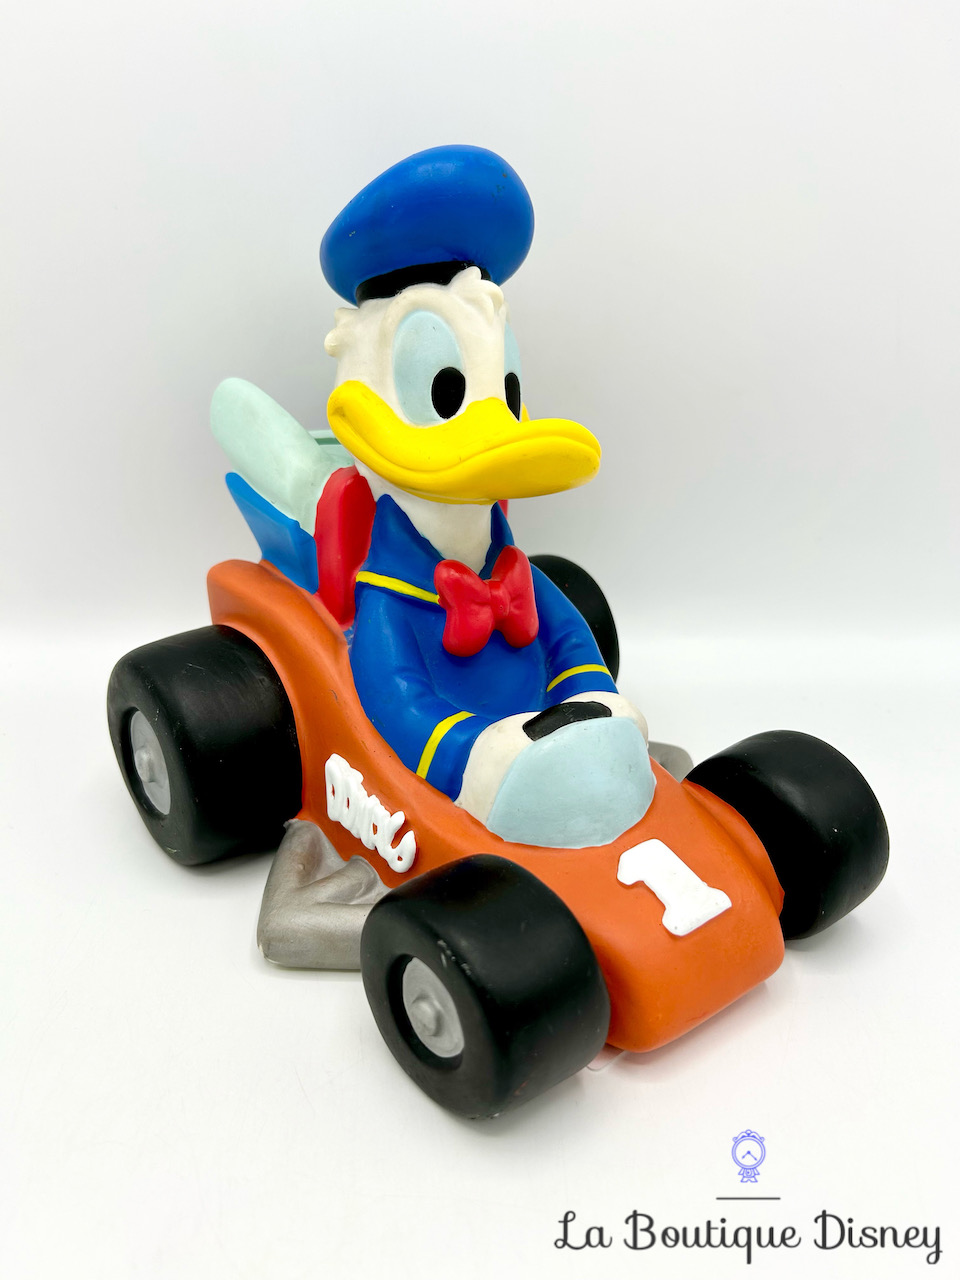 tirelire-donald-duck-karting-voiture-disney-bullyland-plastique-0